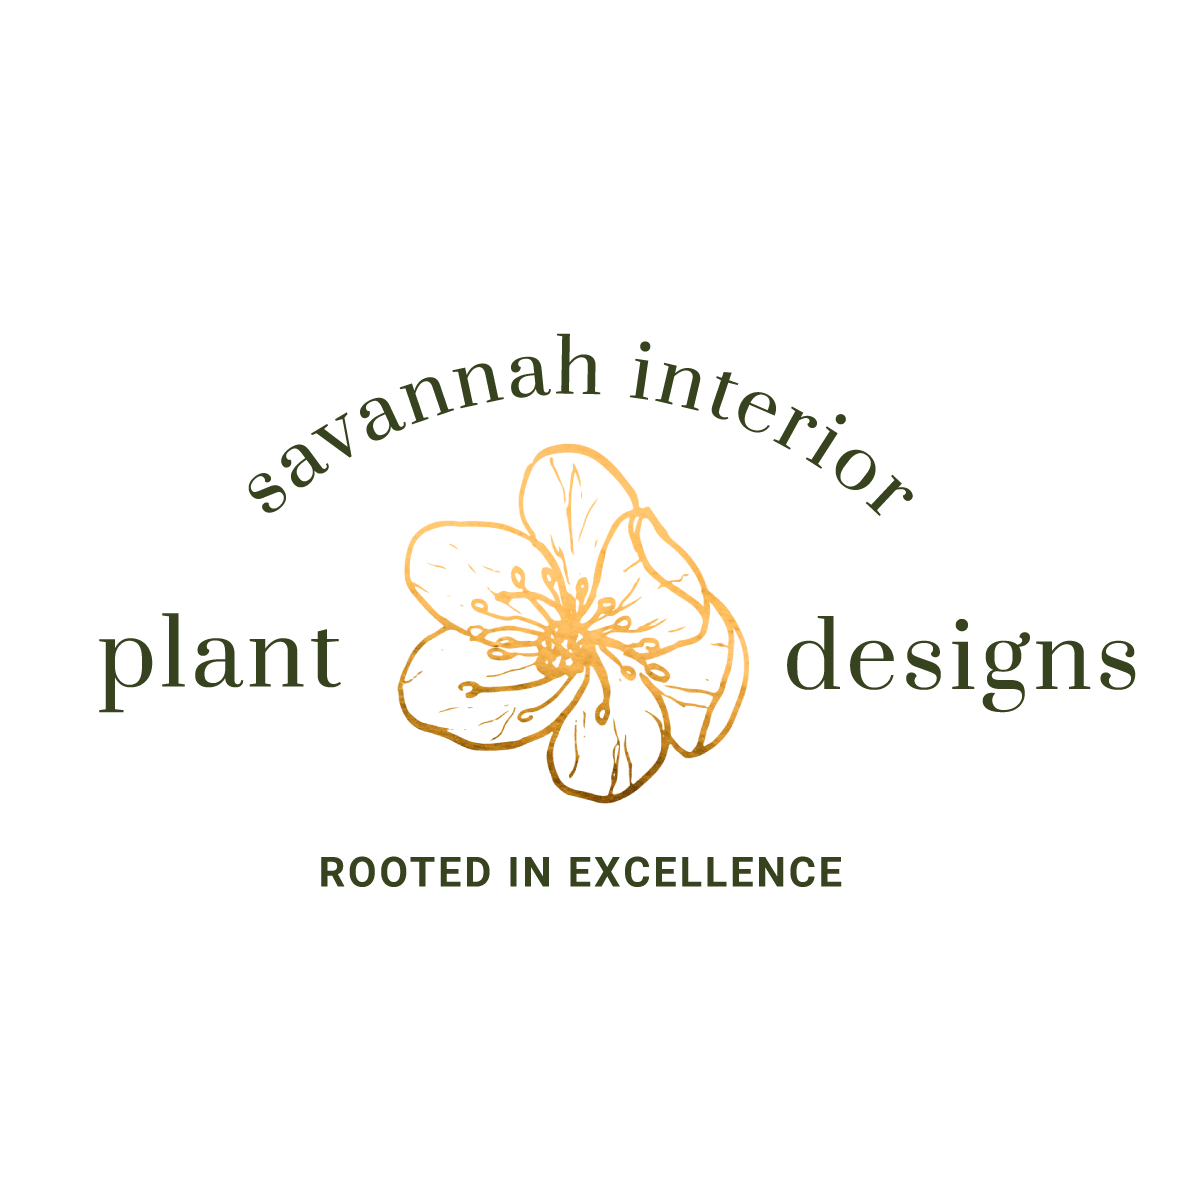 Savannah Interior Plant Designs